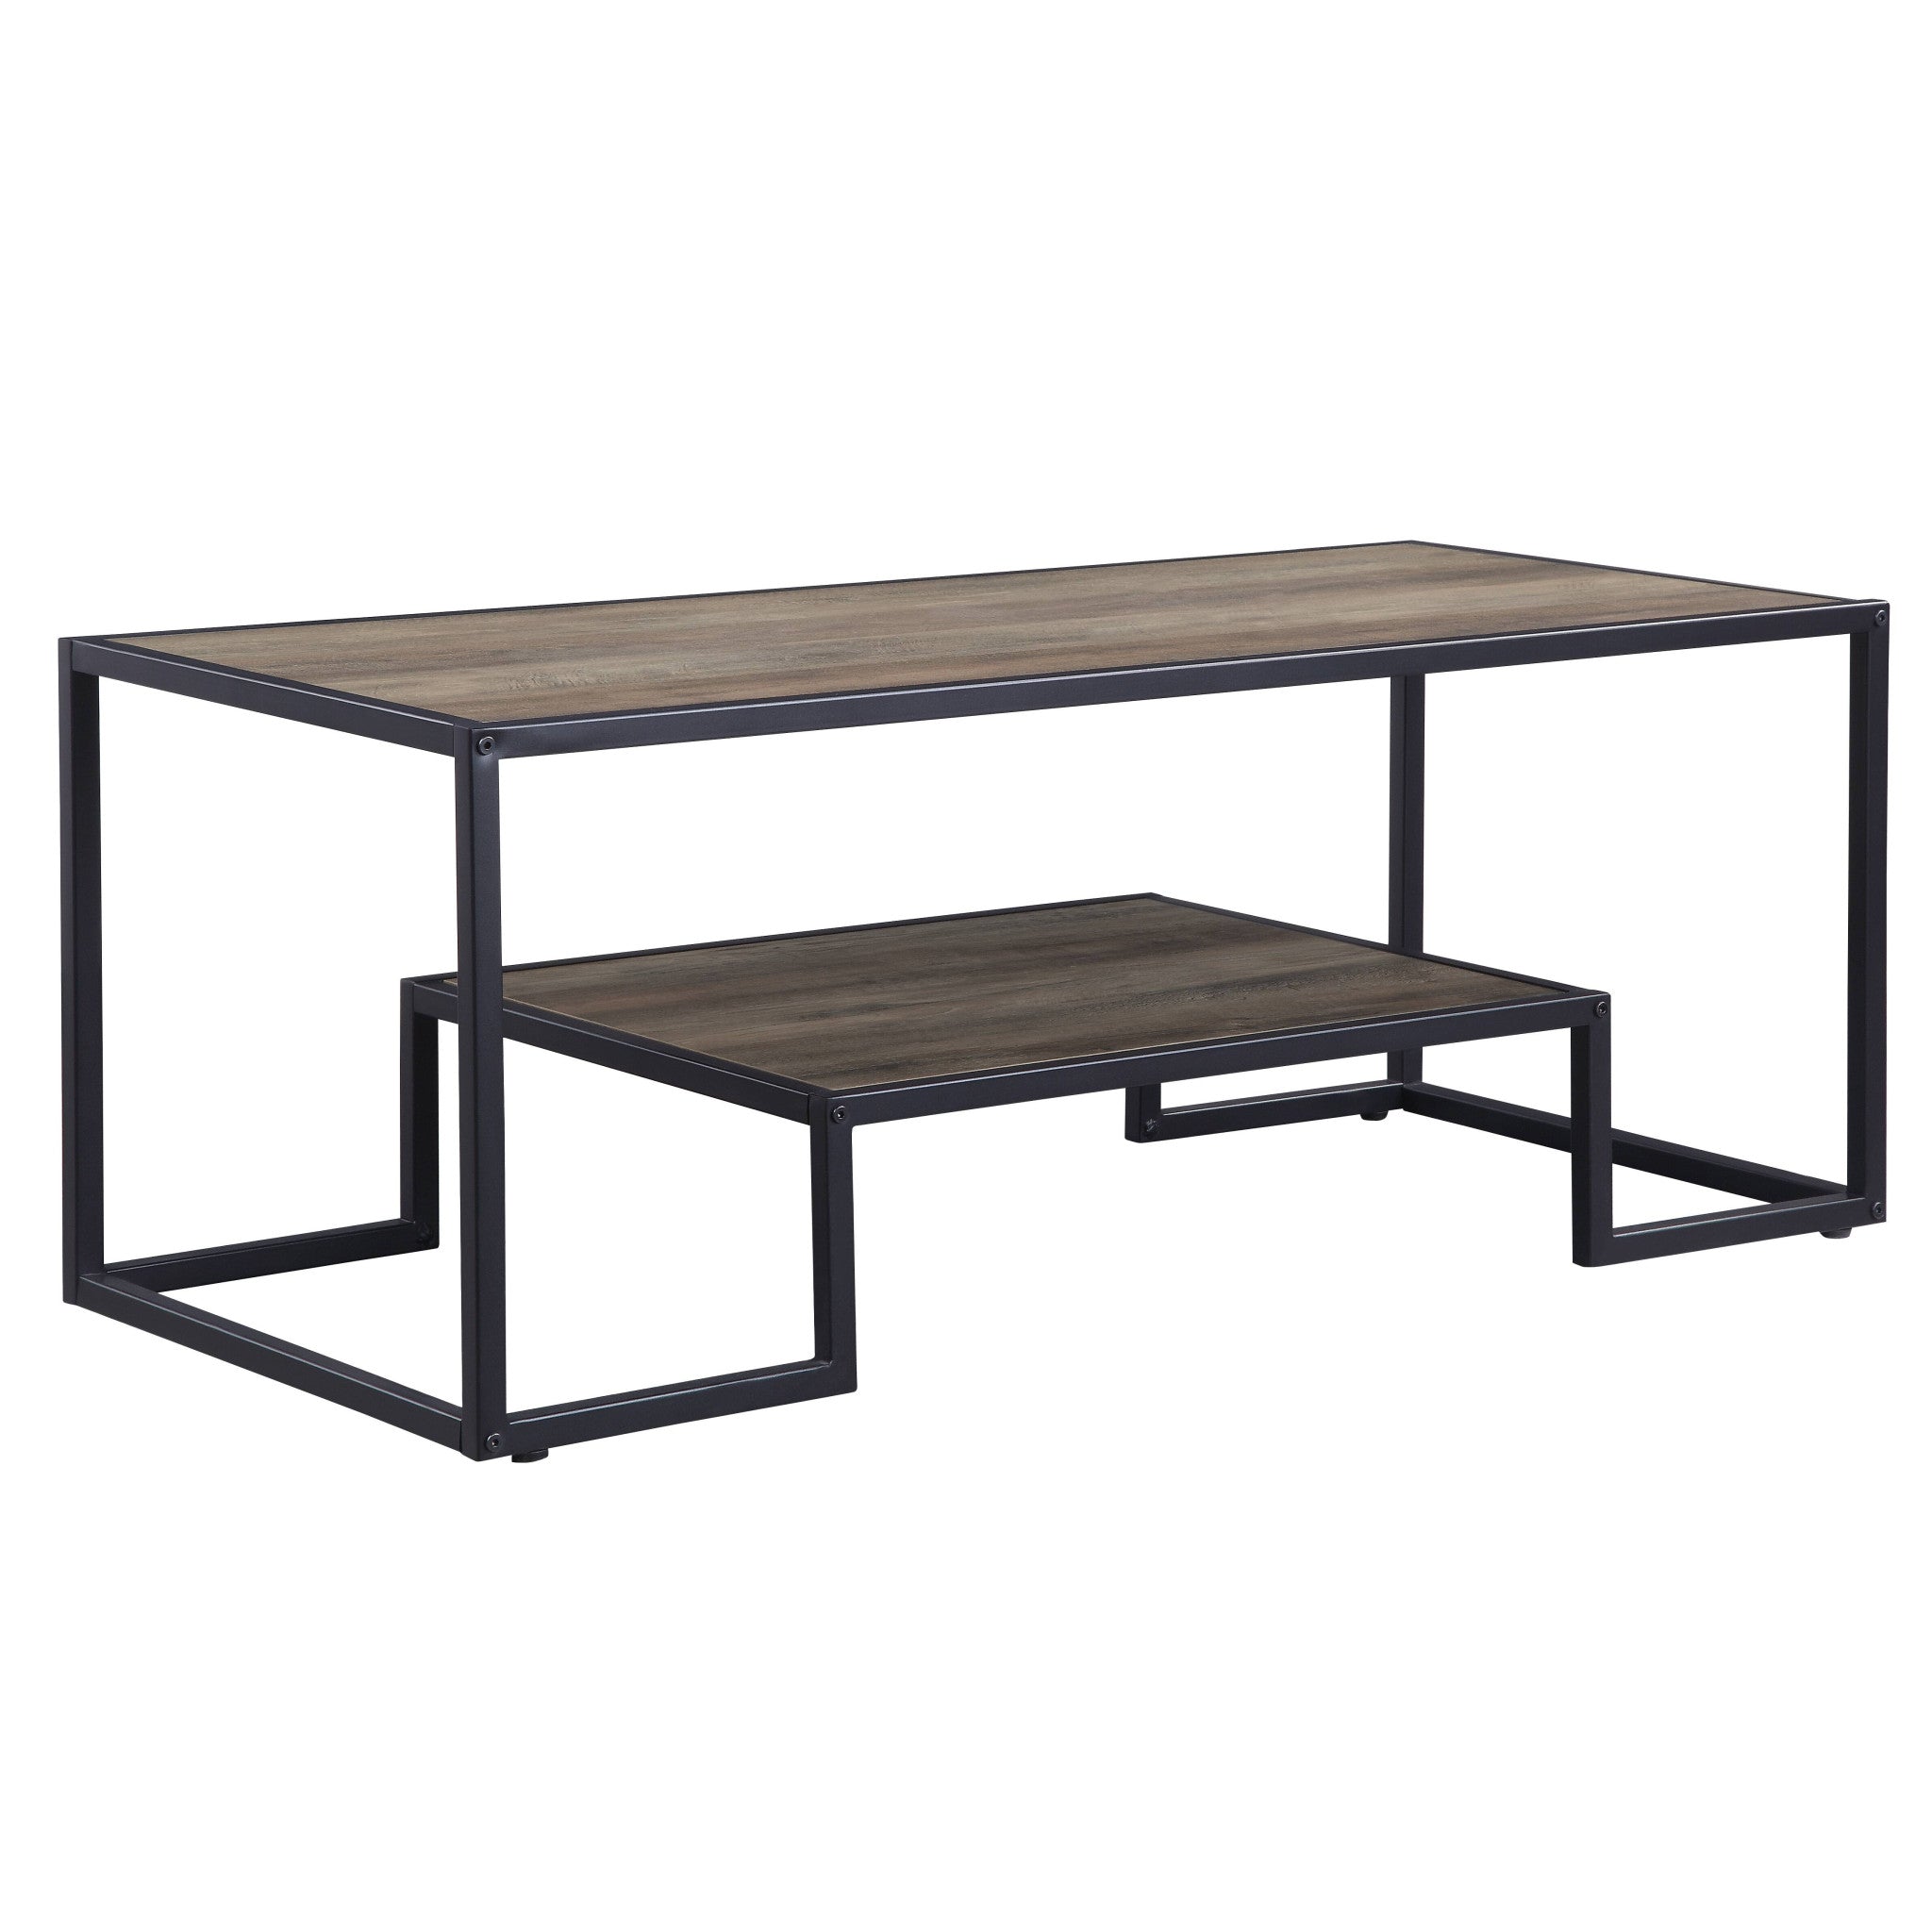 45" Black And Rustic Oak Paper Veneer And Metal Rectangular Coffee Table With Shelf